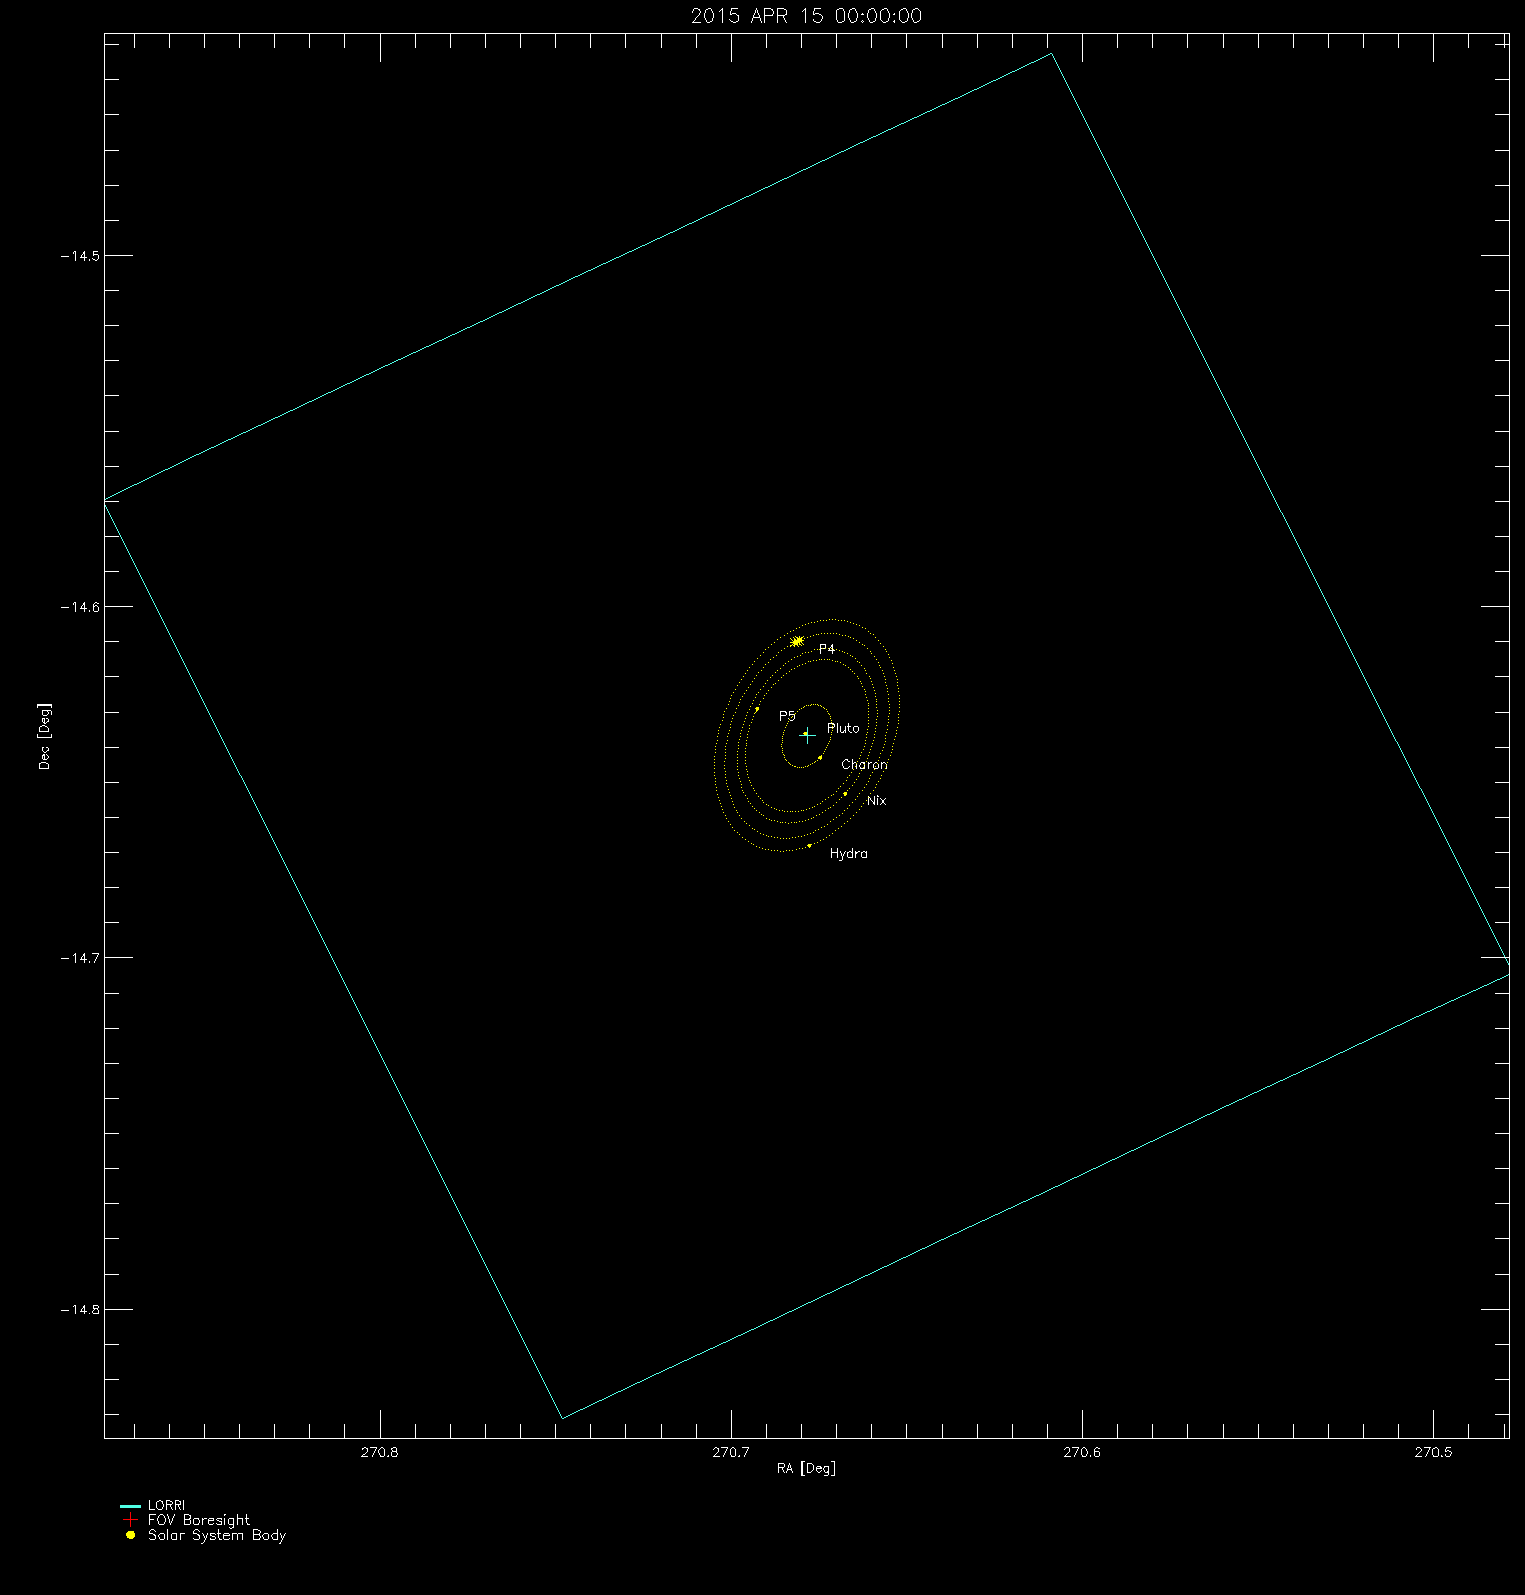 New Horizons Optical Navigation Campaign 3, Charon revolution (simulated)